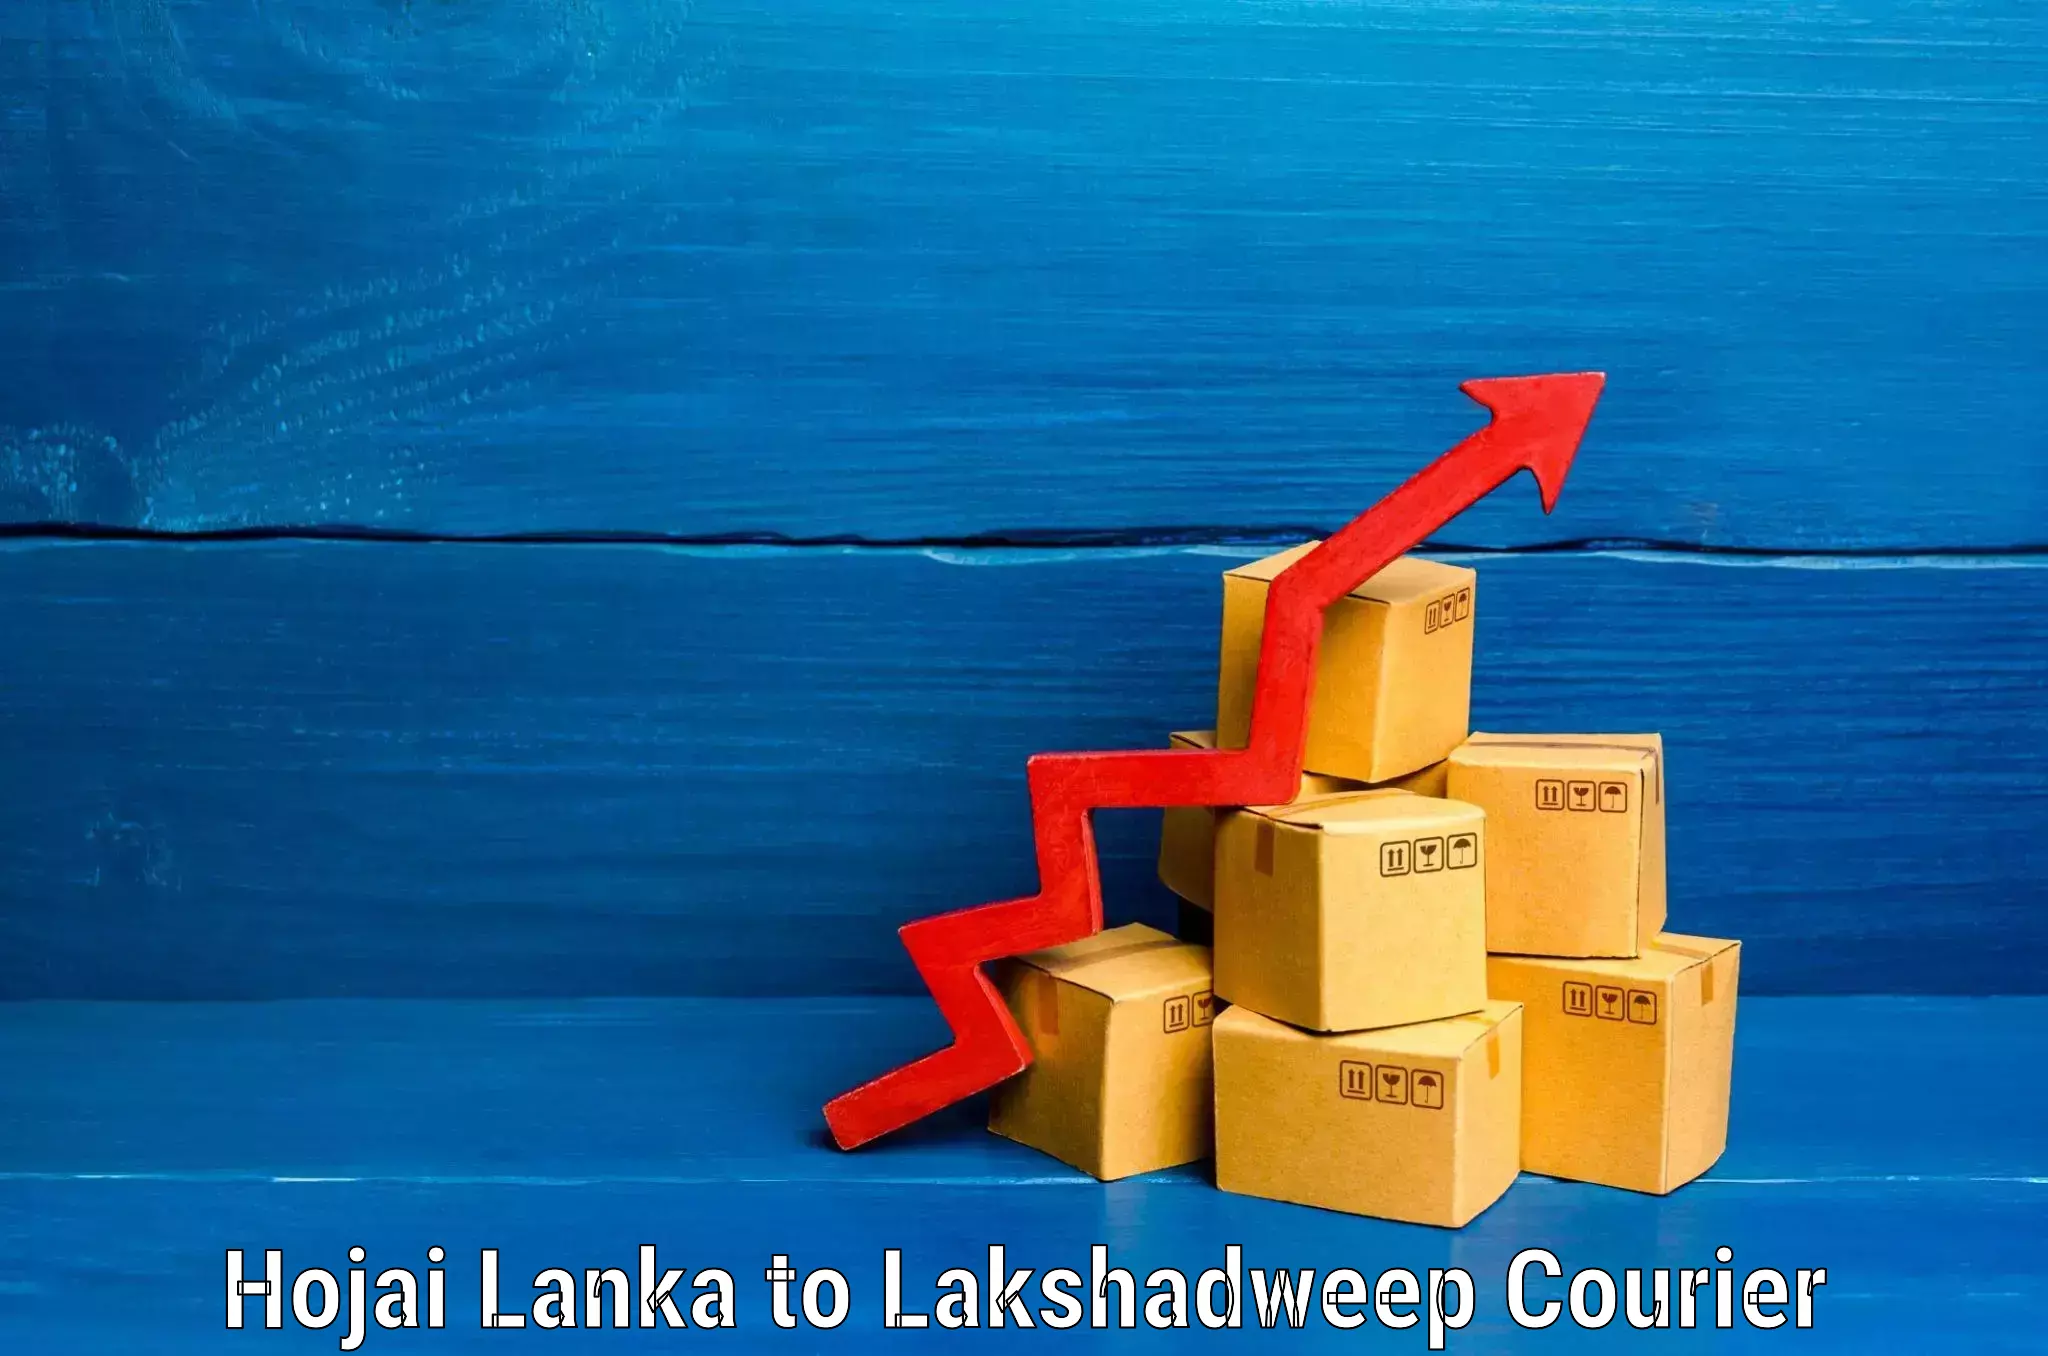 Door-to-door baggage service Hojai Lanka to Lakshadweep